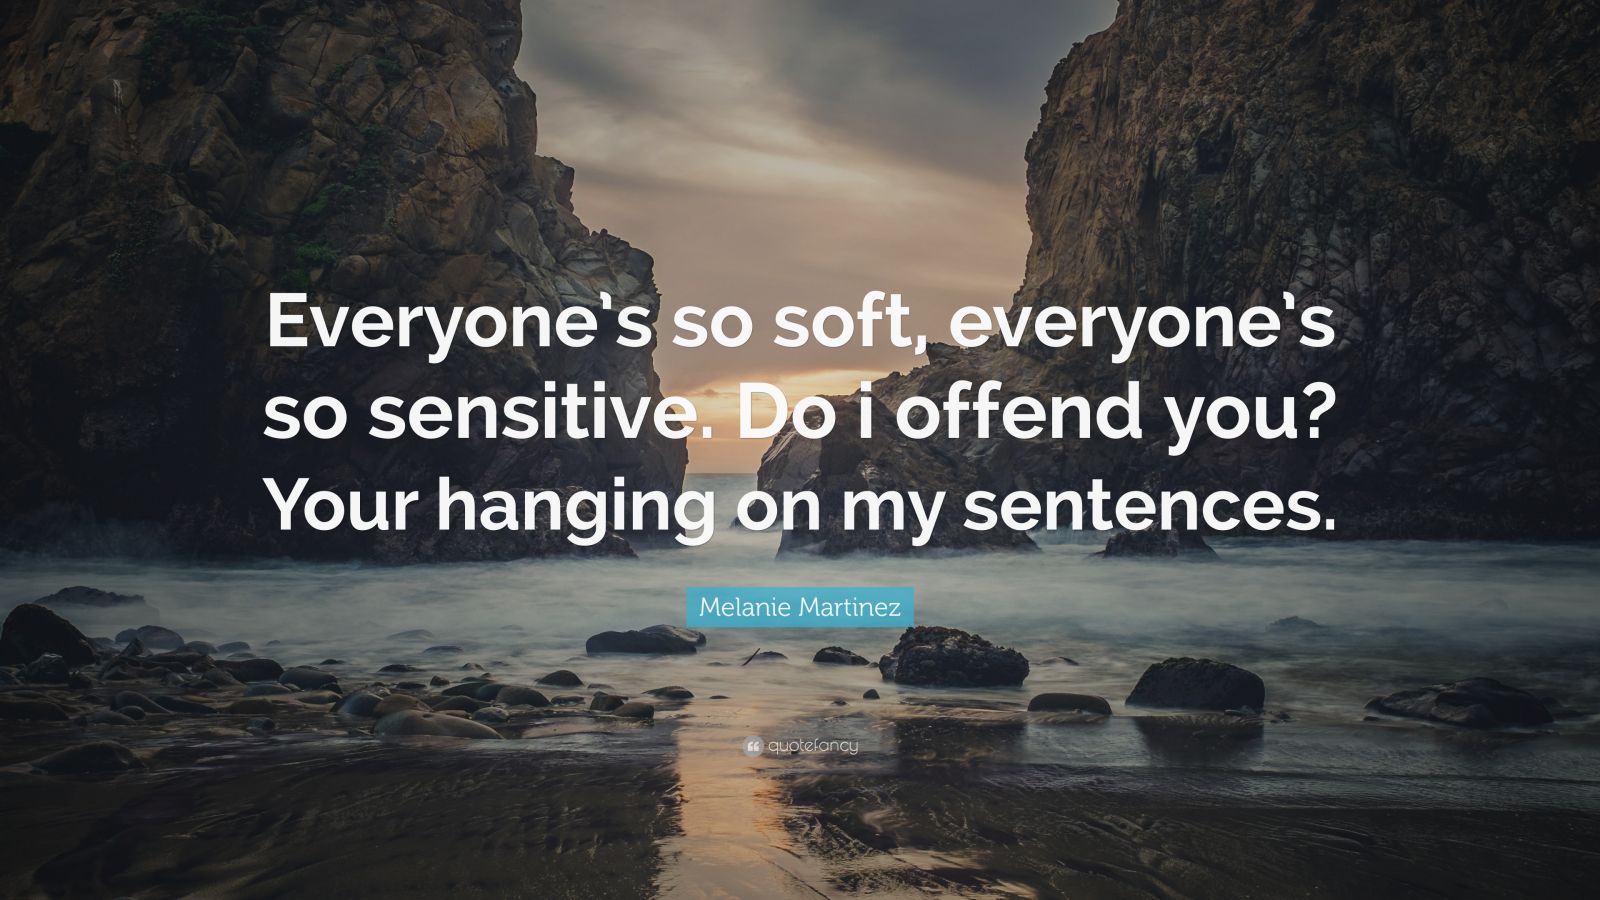 Melanie Martinez Quote: “Everyone’s so soft, everyone’s so sensitive ...